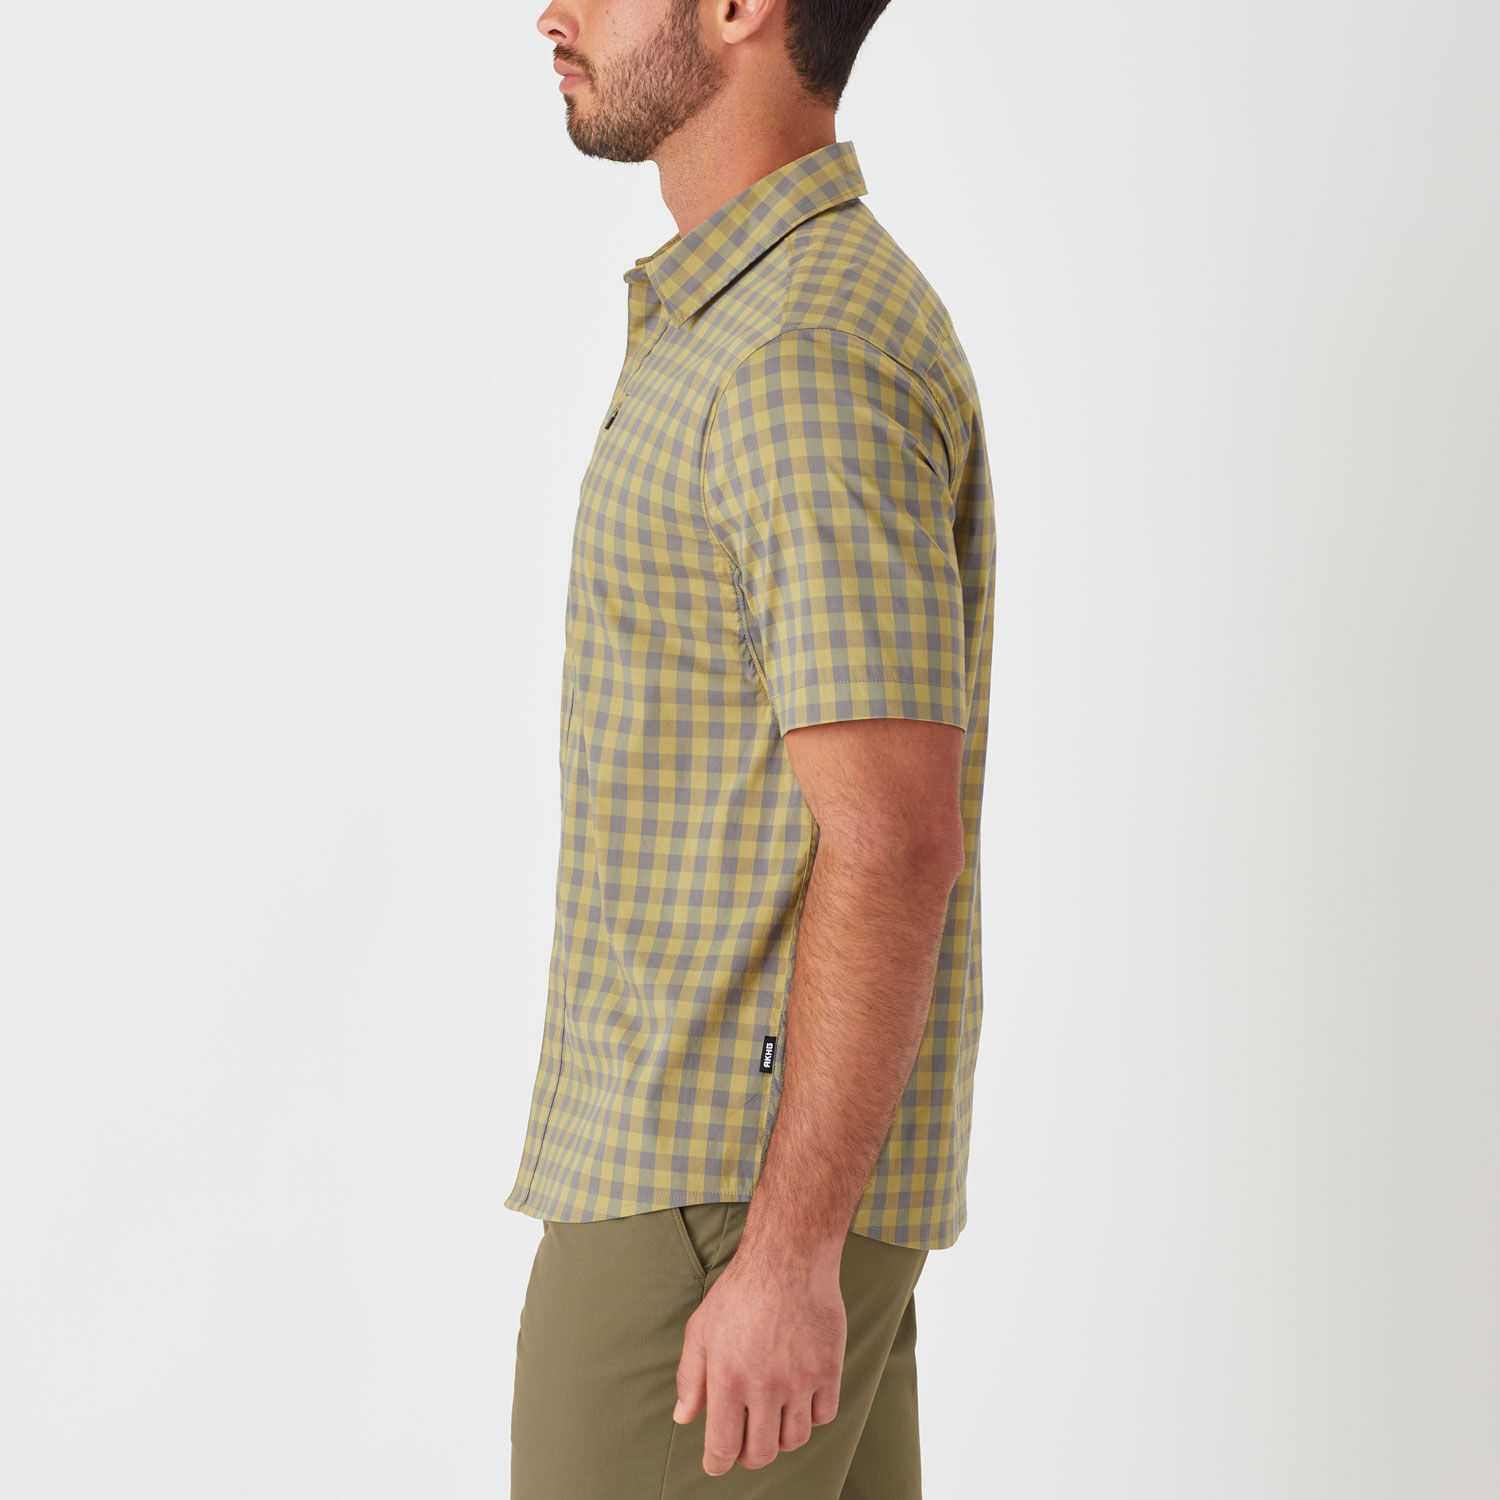 Men's AKHG Roadless Short Sleeve Shirt | Duluth Trading Company